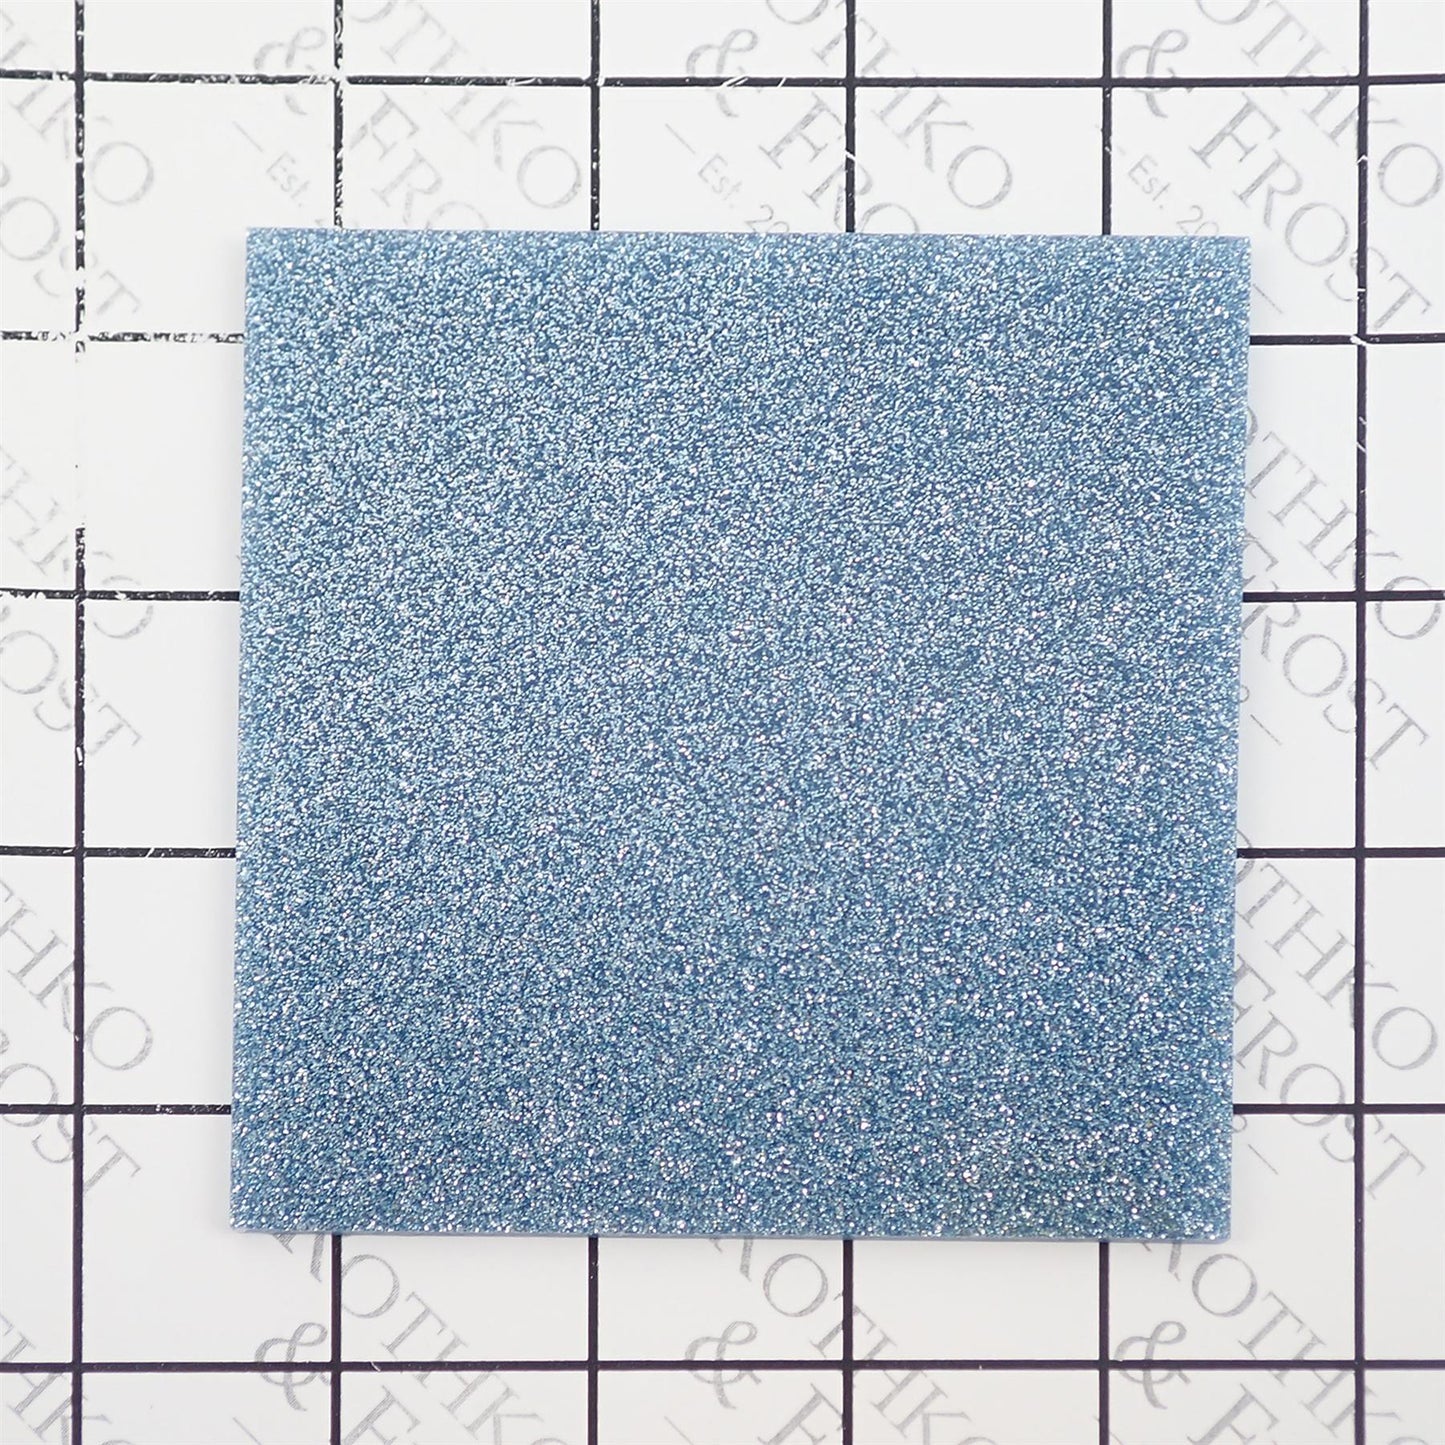 Incudo Baby Blue 2-Sided Glitter Acrylic Sheet - 300x200x3mm (11.8x7.87x0.12")